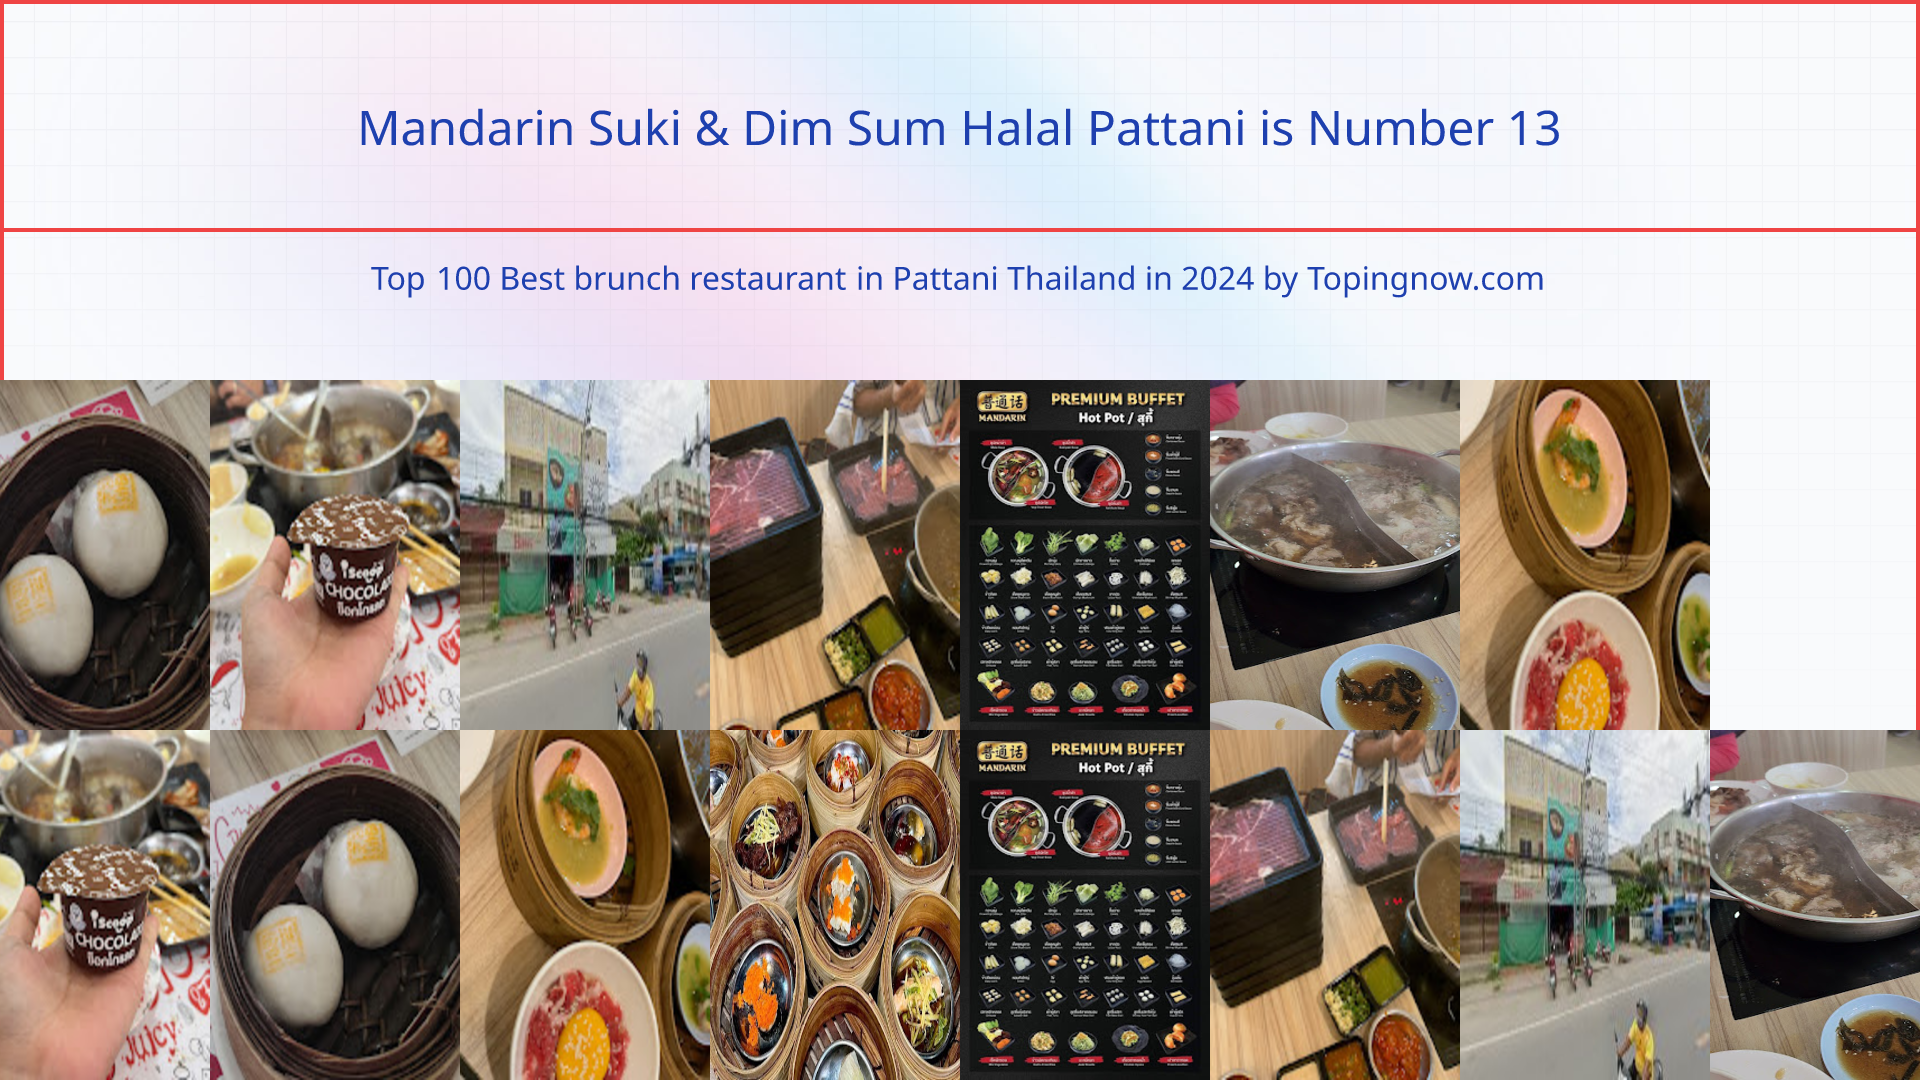 Mandarin Suki & Dim Sum Halal Pattani: Top 100 Best brunch restaurant in Pattani Thailand in 2024